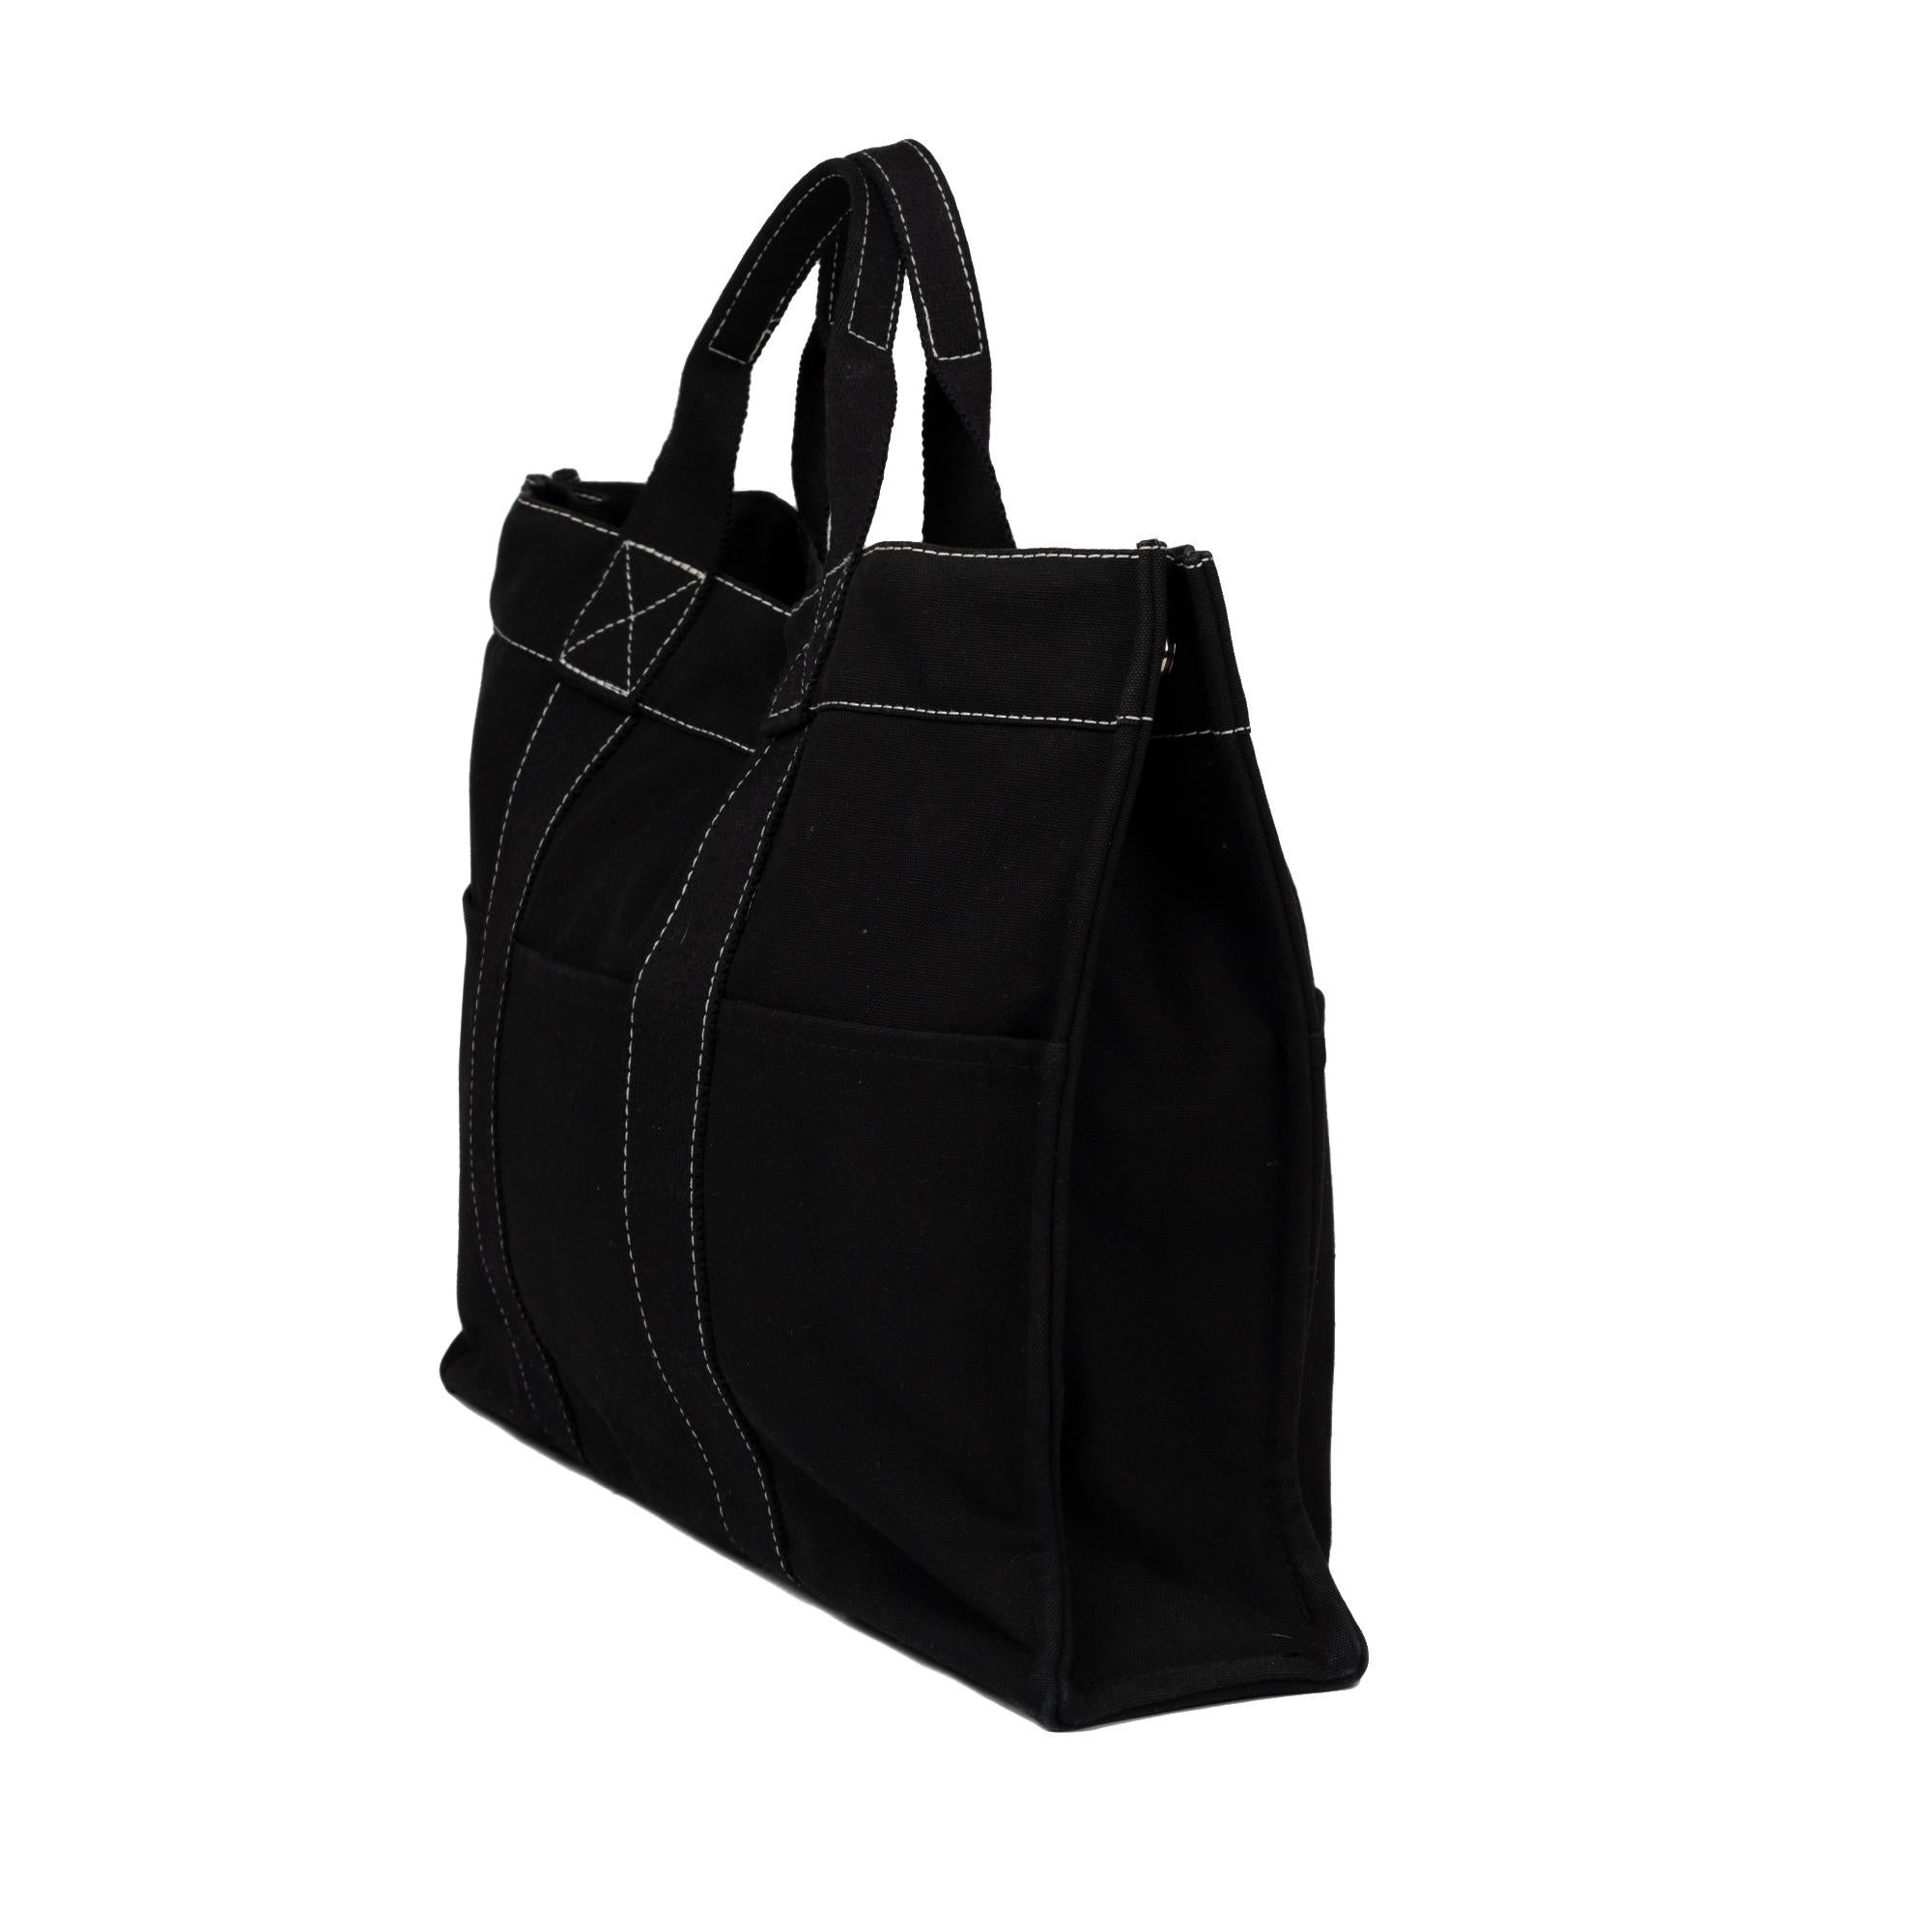 Black Hermes Toto Shopping Bag